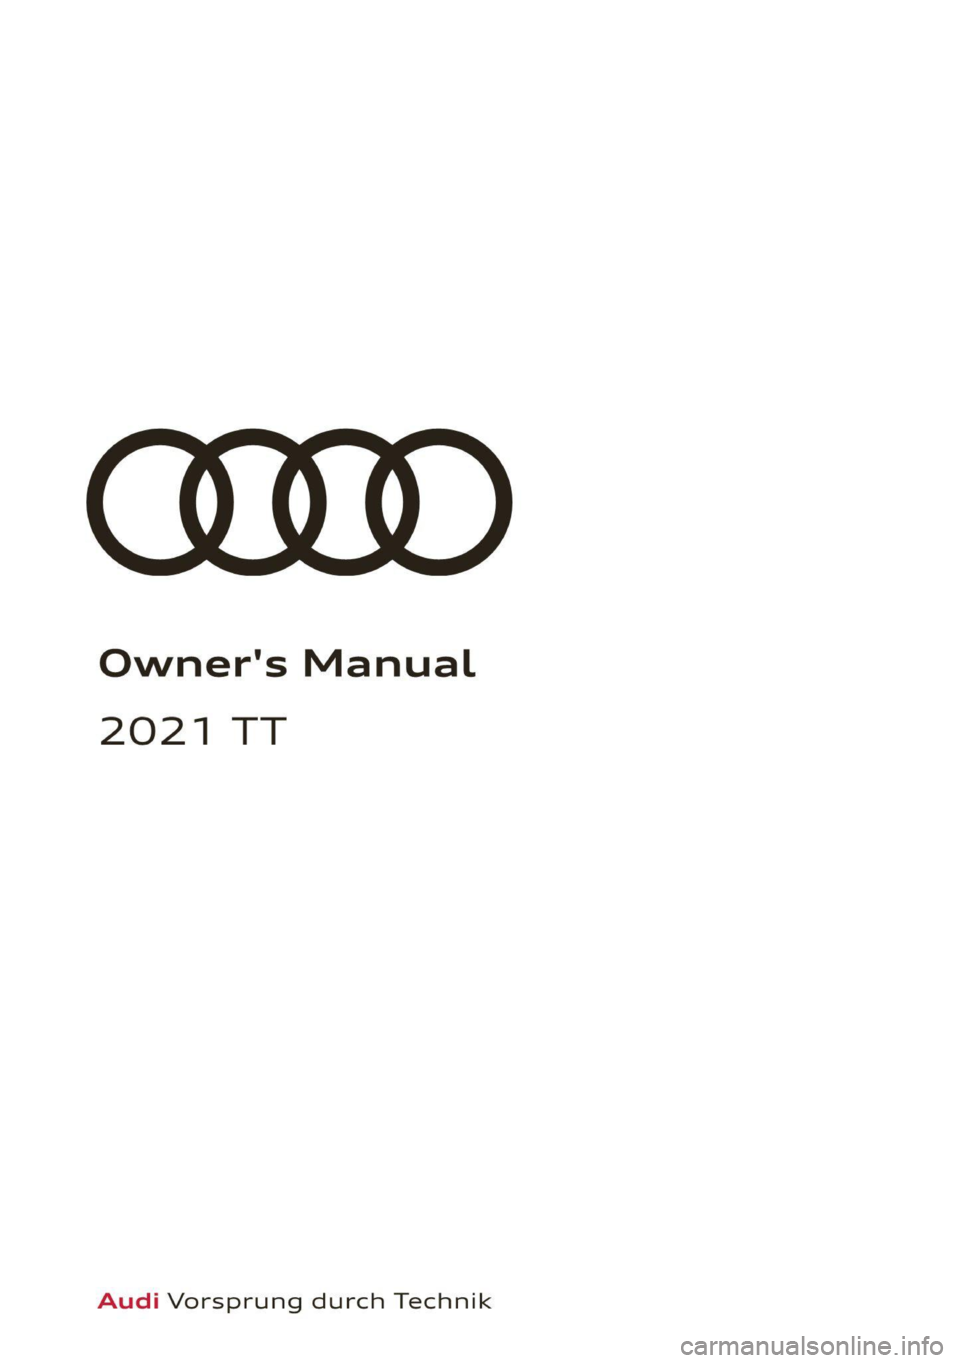 AUDI TT 2021  Owner´s Manual Owner's Manual 
2021 TT 
Audi Vorsprung durch Technik  